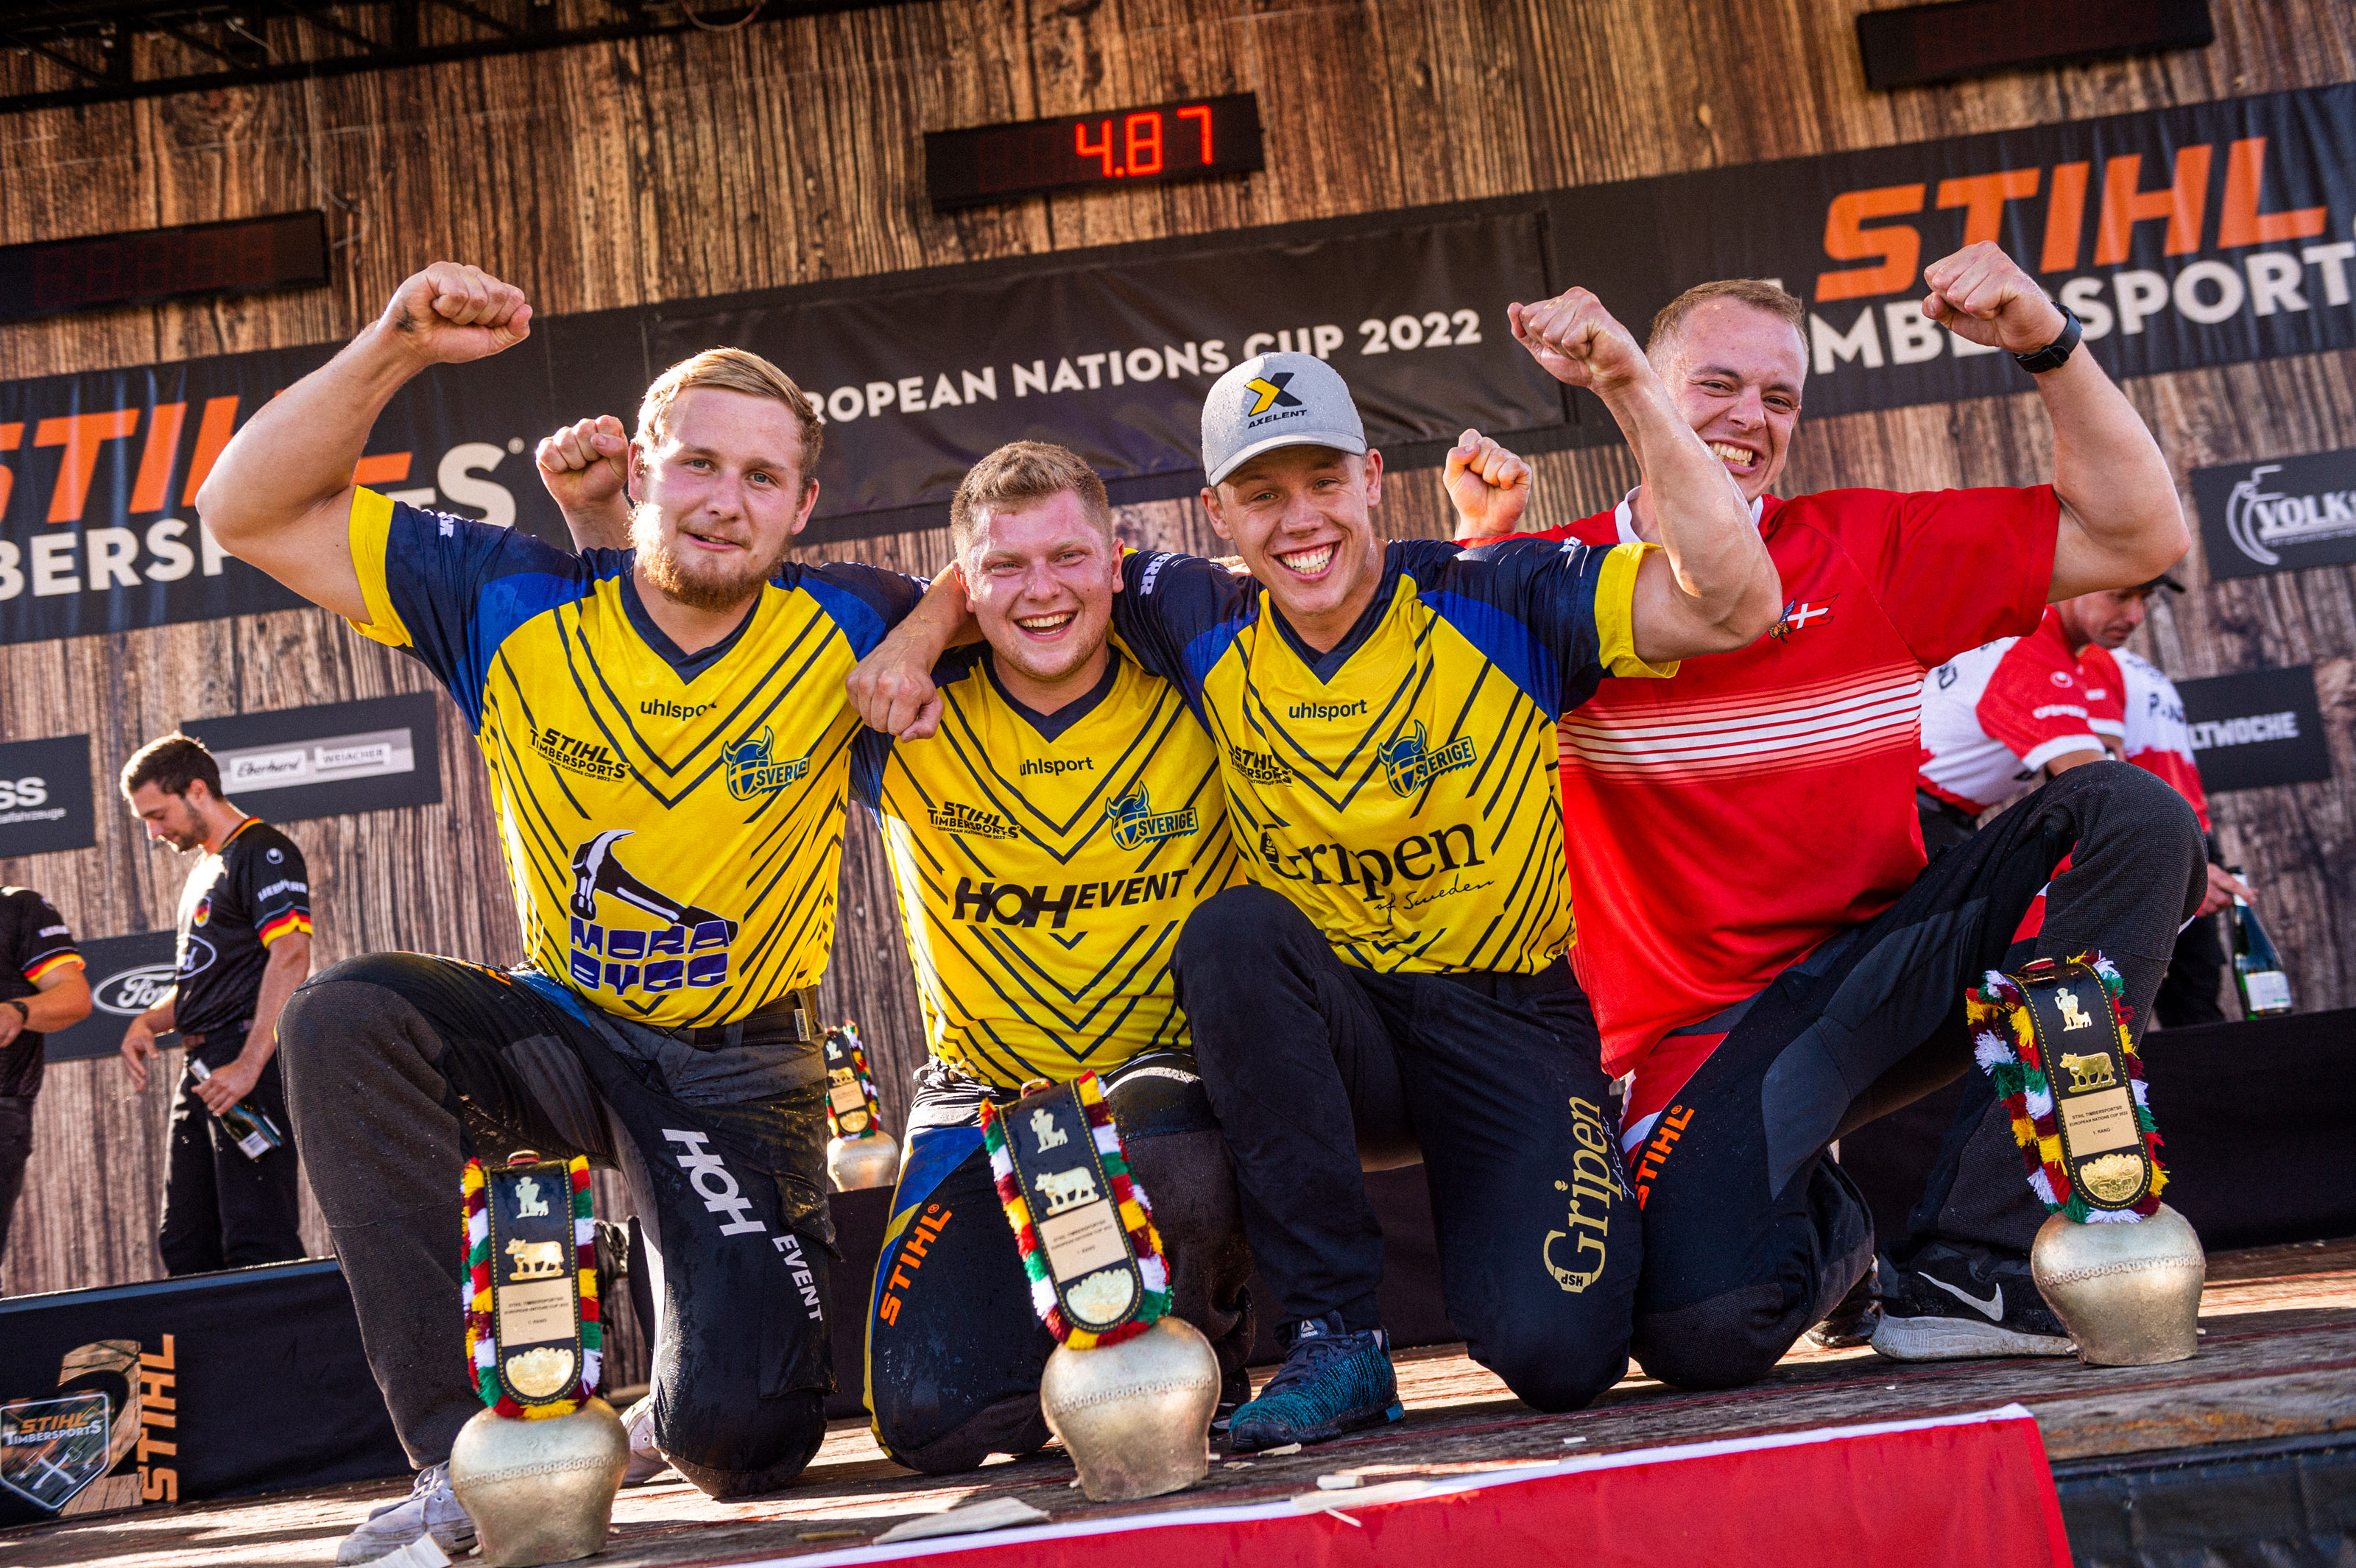 A combined Scandinavian team of Sweden’s Emil Hansson, Ferry Svan, Edvin Karlsson and Denmark’s Esben Pedersen claimed the European Nations Cup